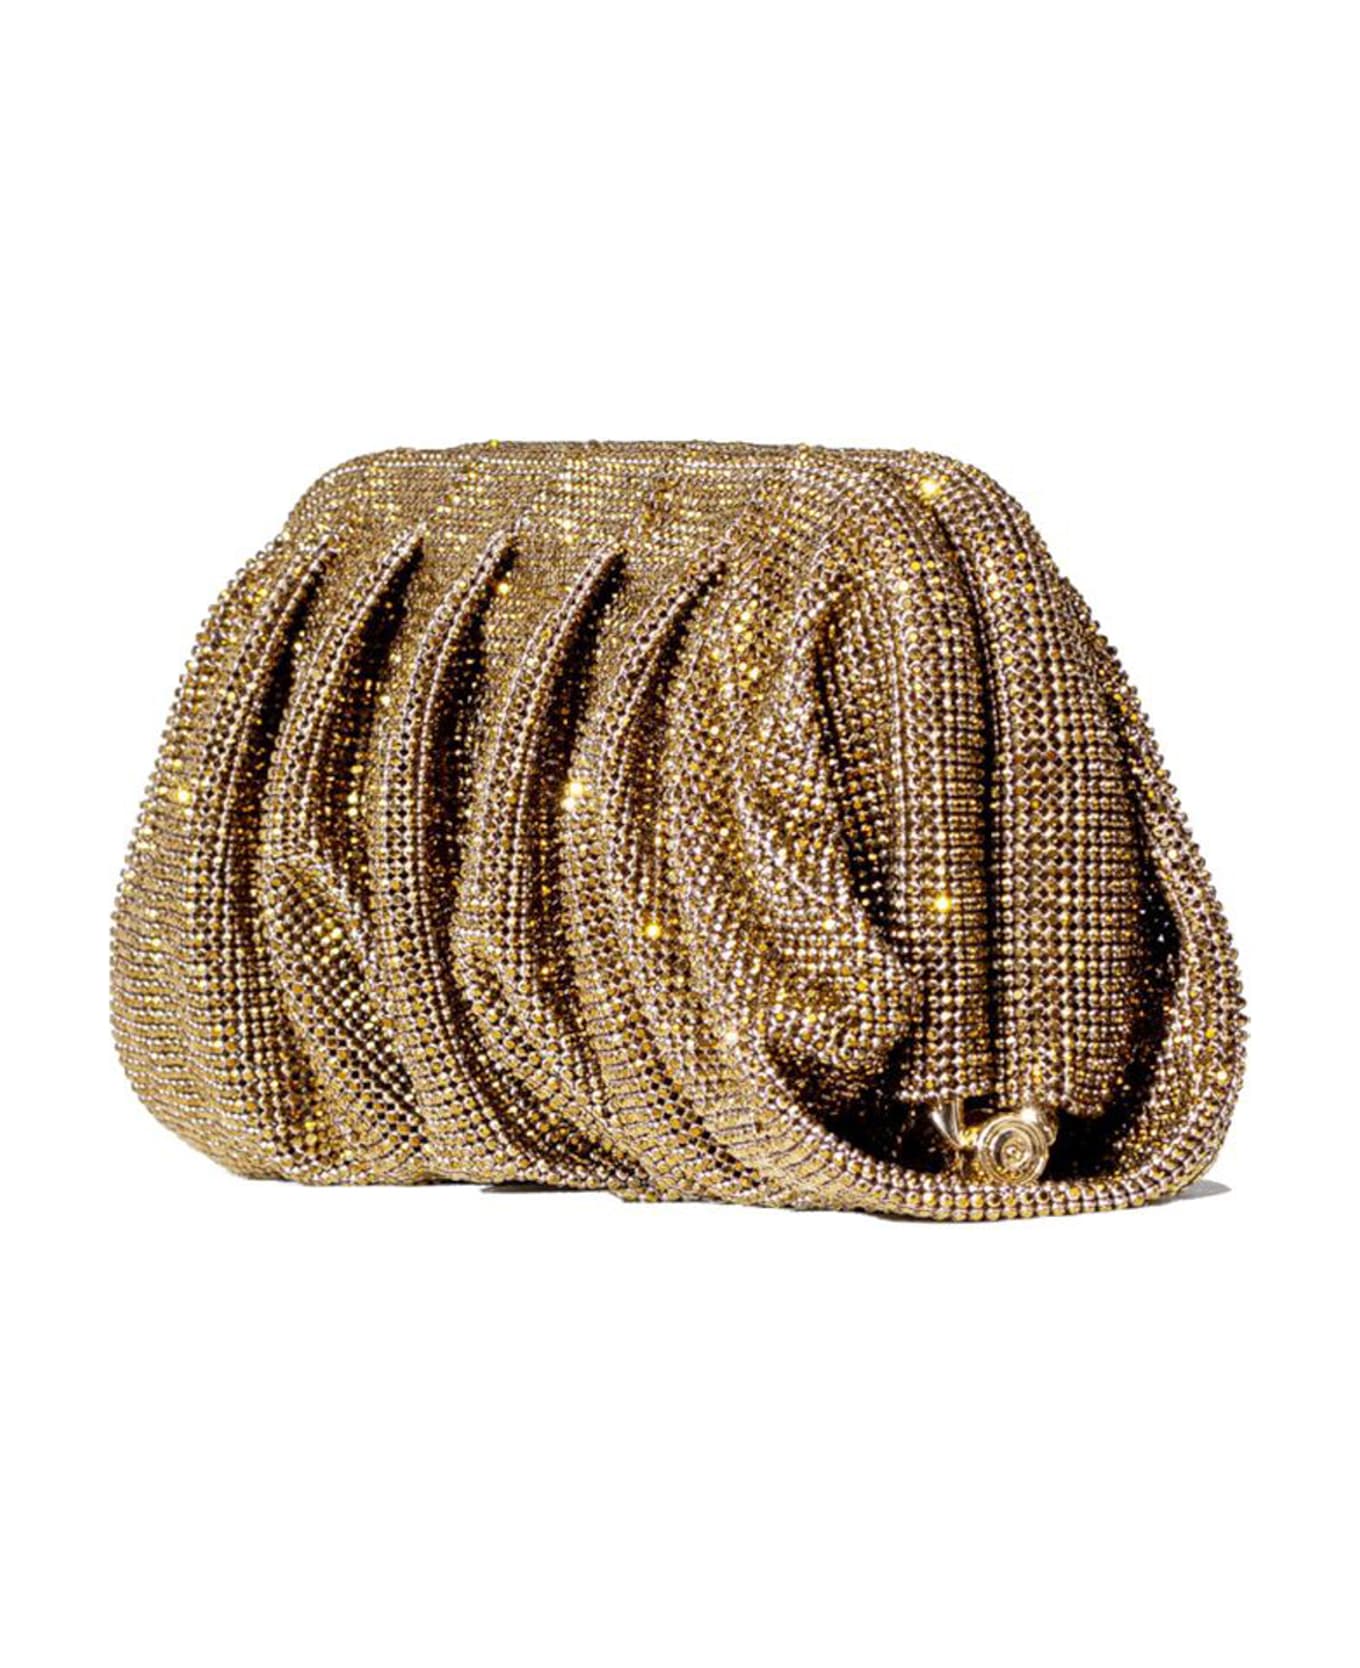 Benedetta Bruzziches Gold-tone Venus La Grande Crystal Clutch Bag - Golden